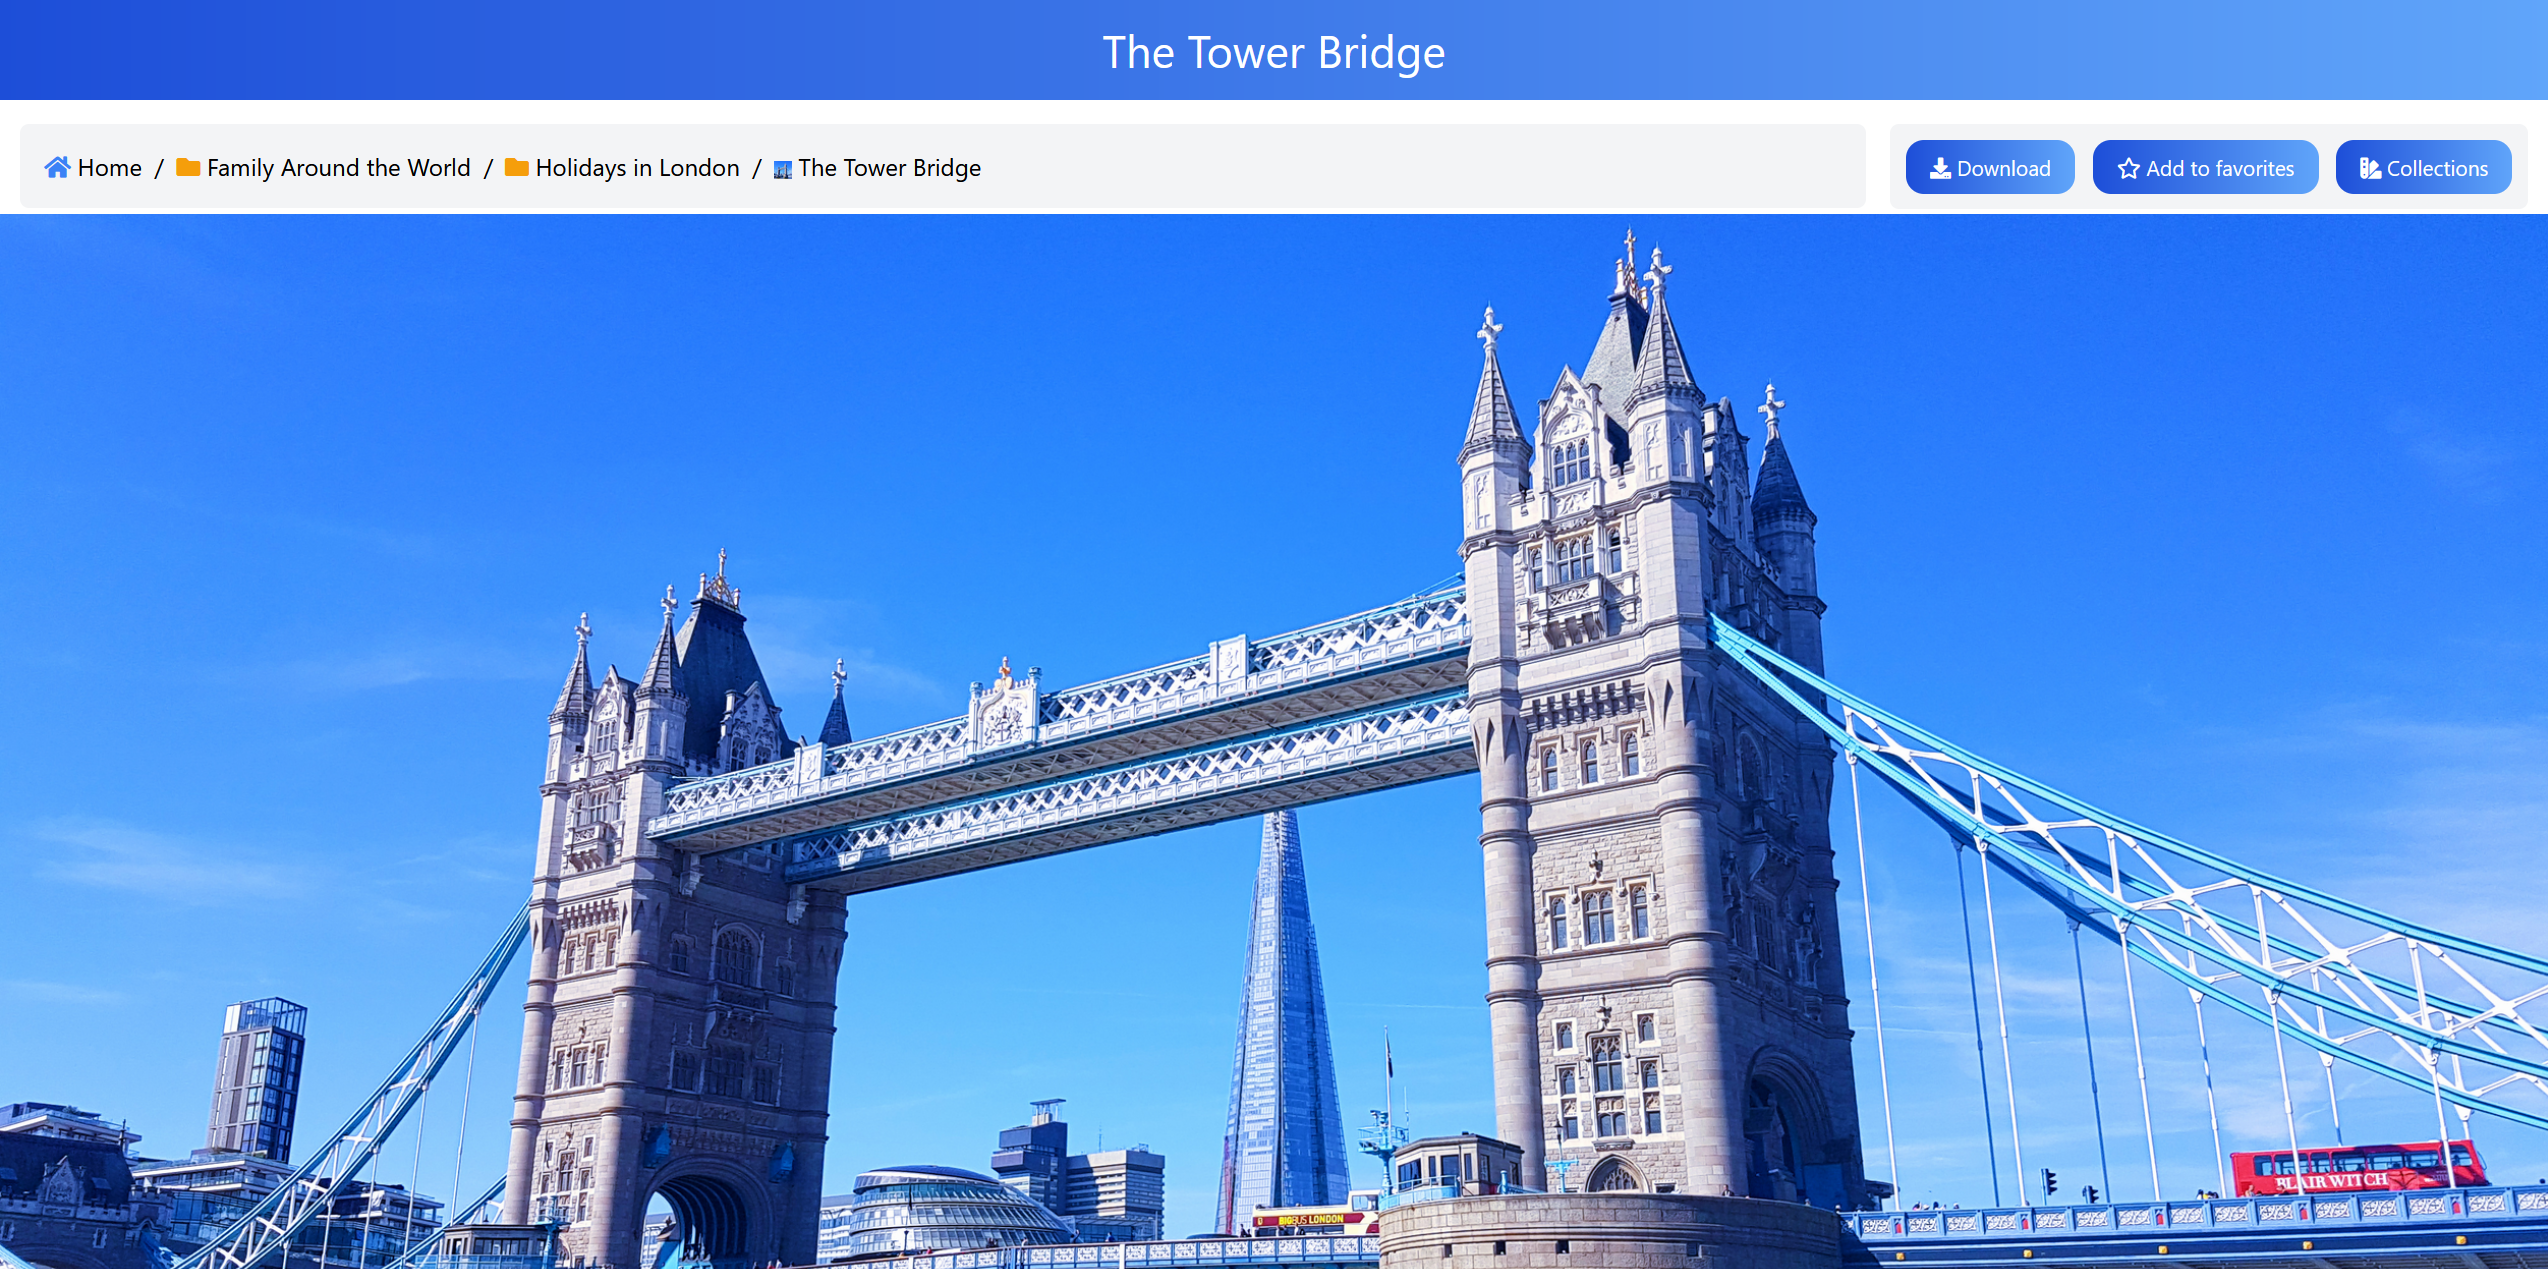 The Tower Bridge (London)